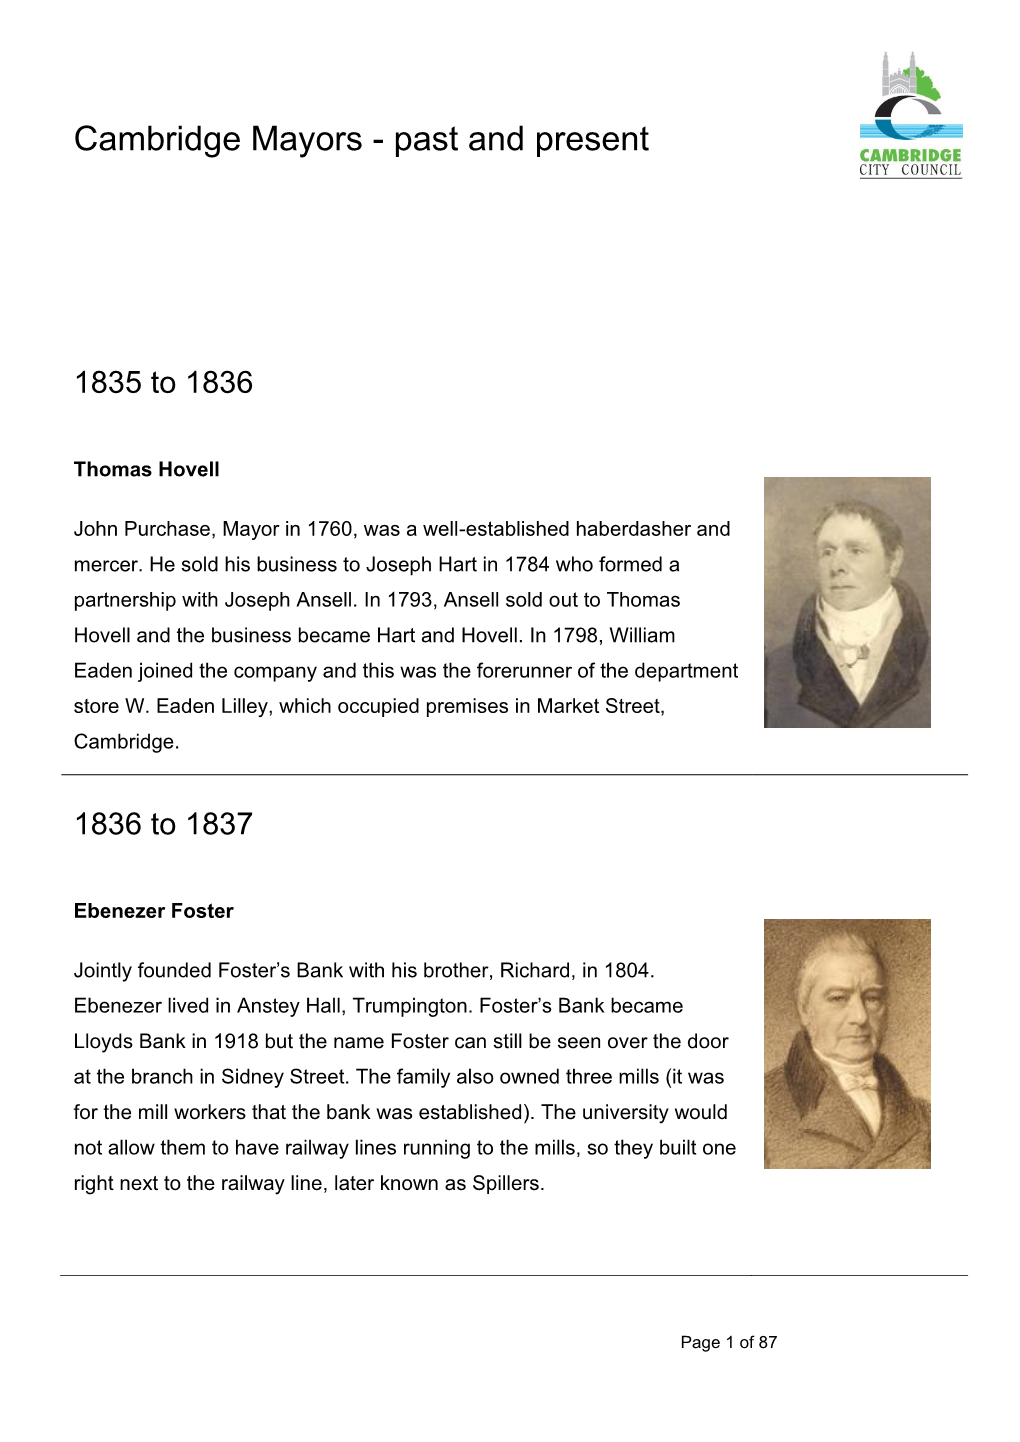 Cambridge Mayors - Past and Present